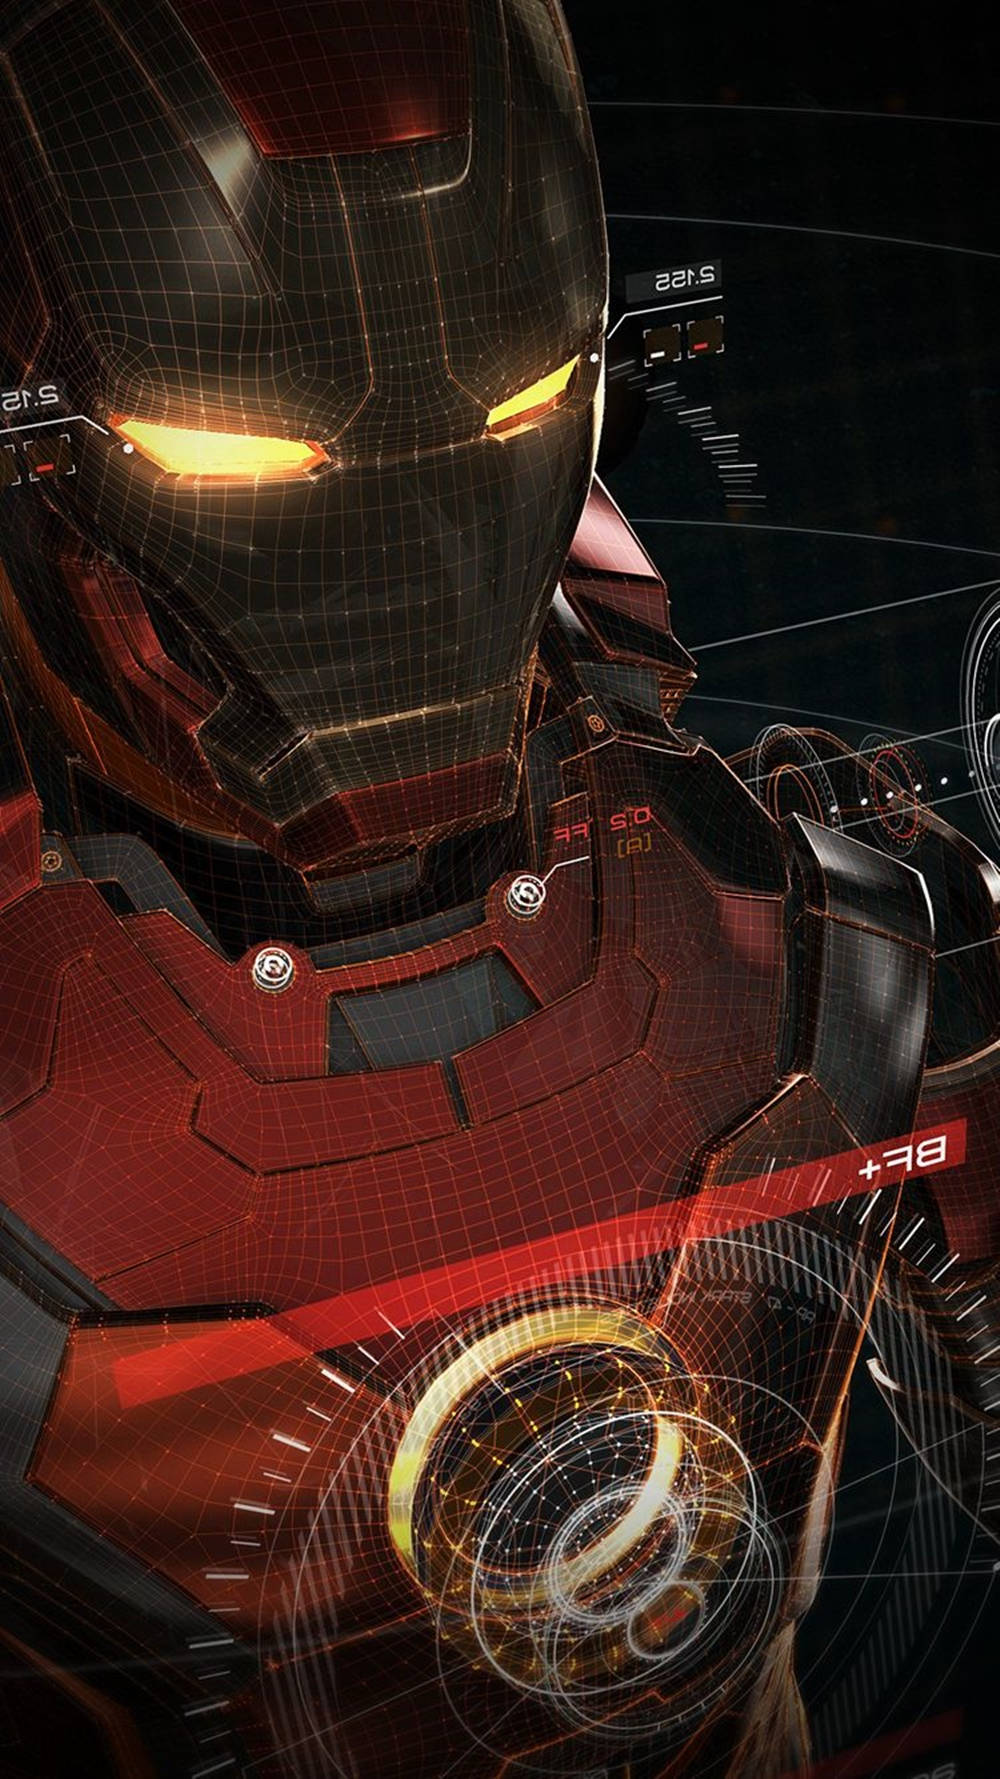 Caption: Stylish Iron Man Phone With Robotic Design